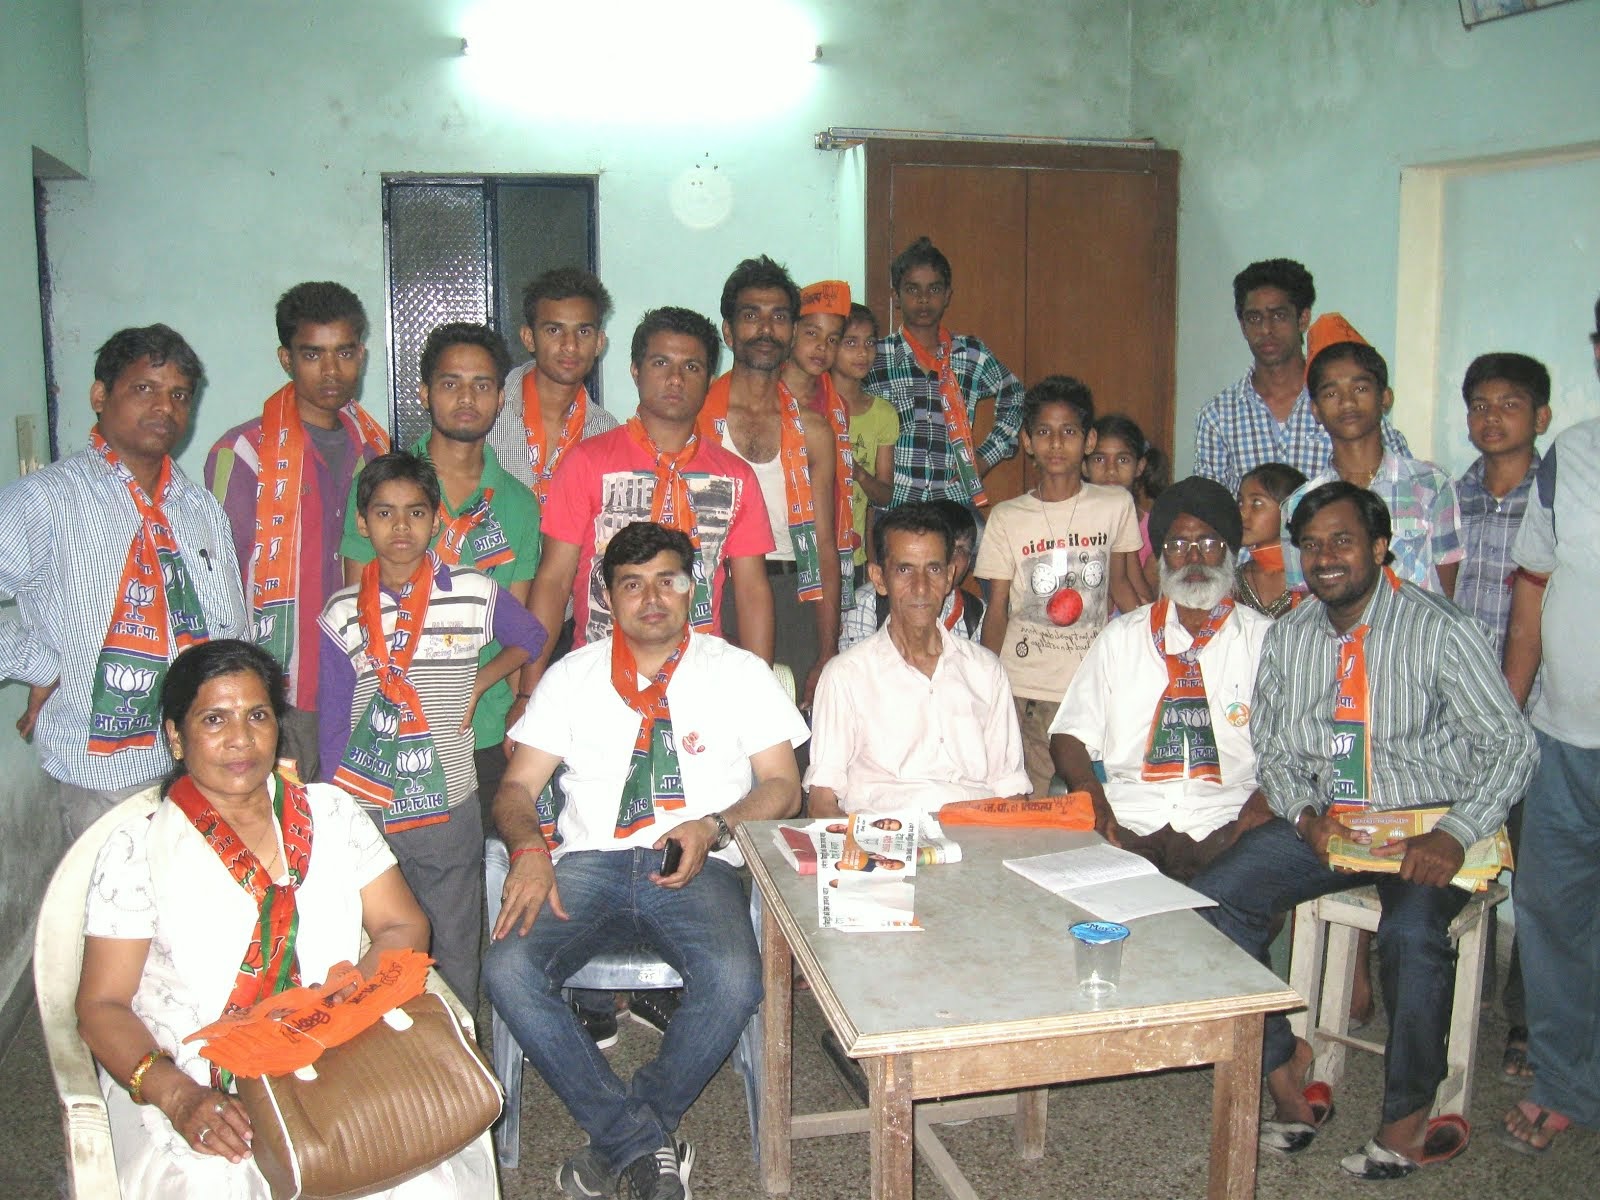 2014,lok sabha election campaign for Ramesh Vidhudi,BJP Candidate from South Delhi.